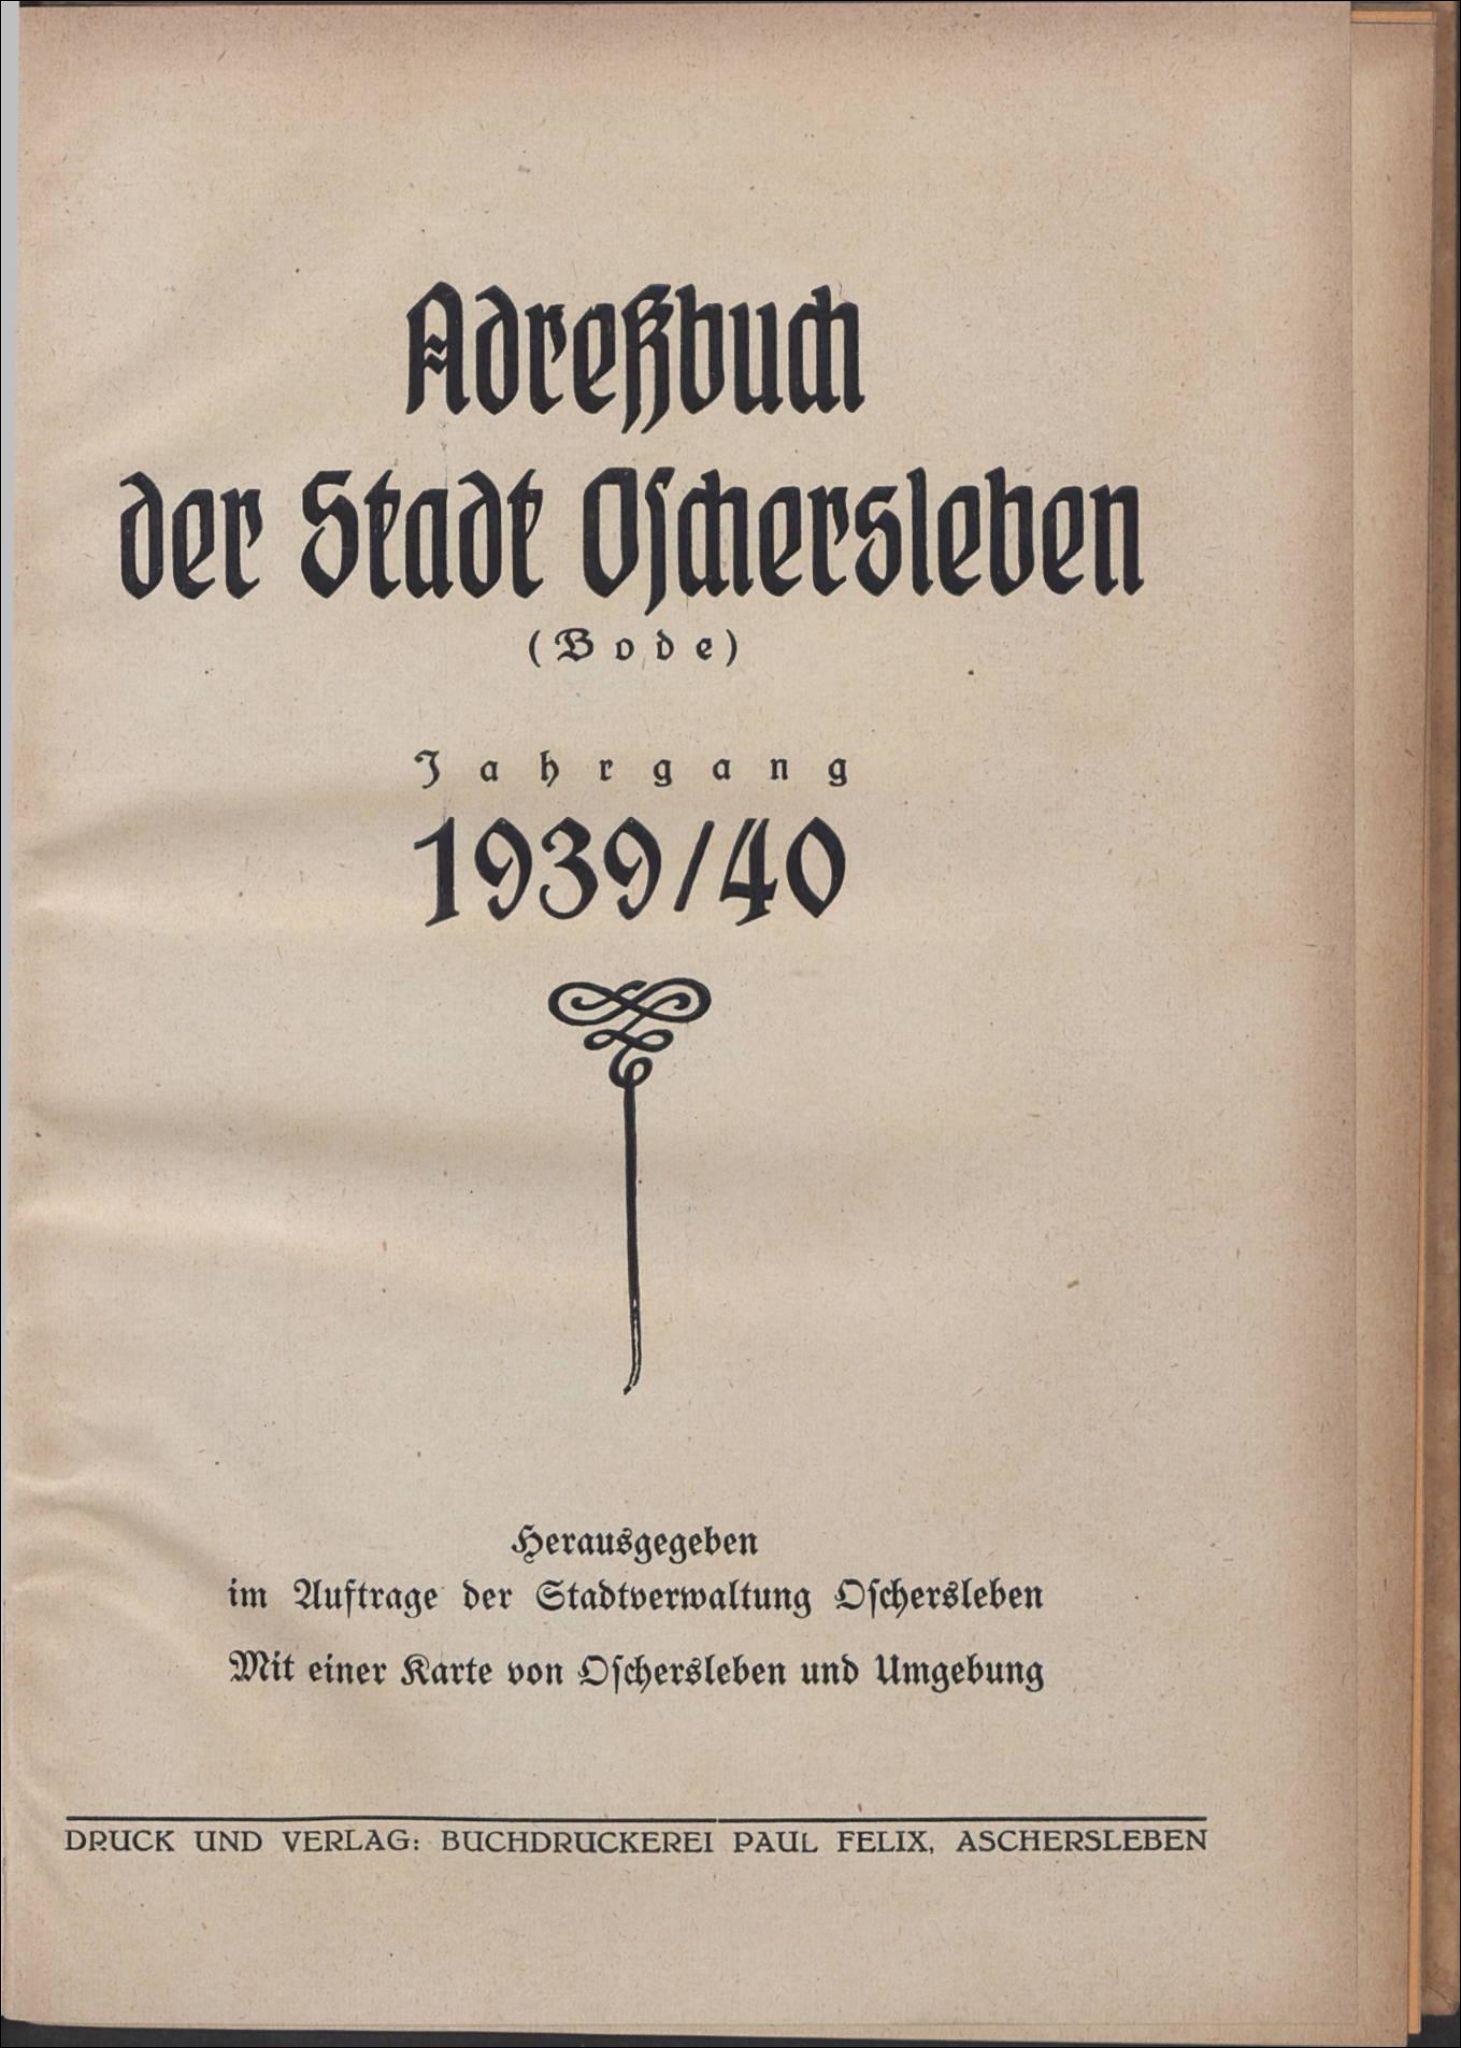 Adreßbuch der Stadt Oschersleben (Bode) 1939/40